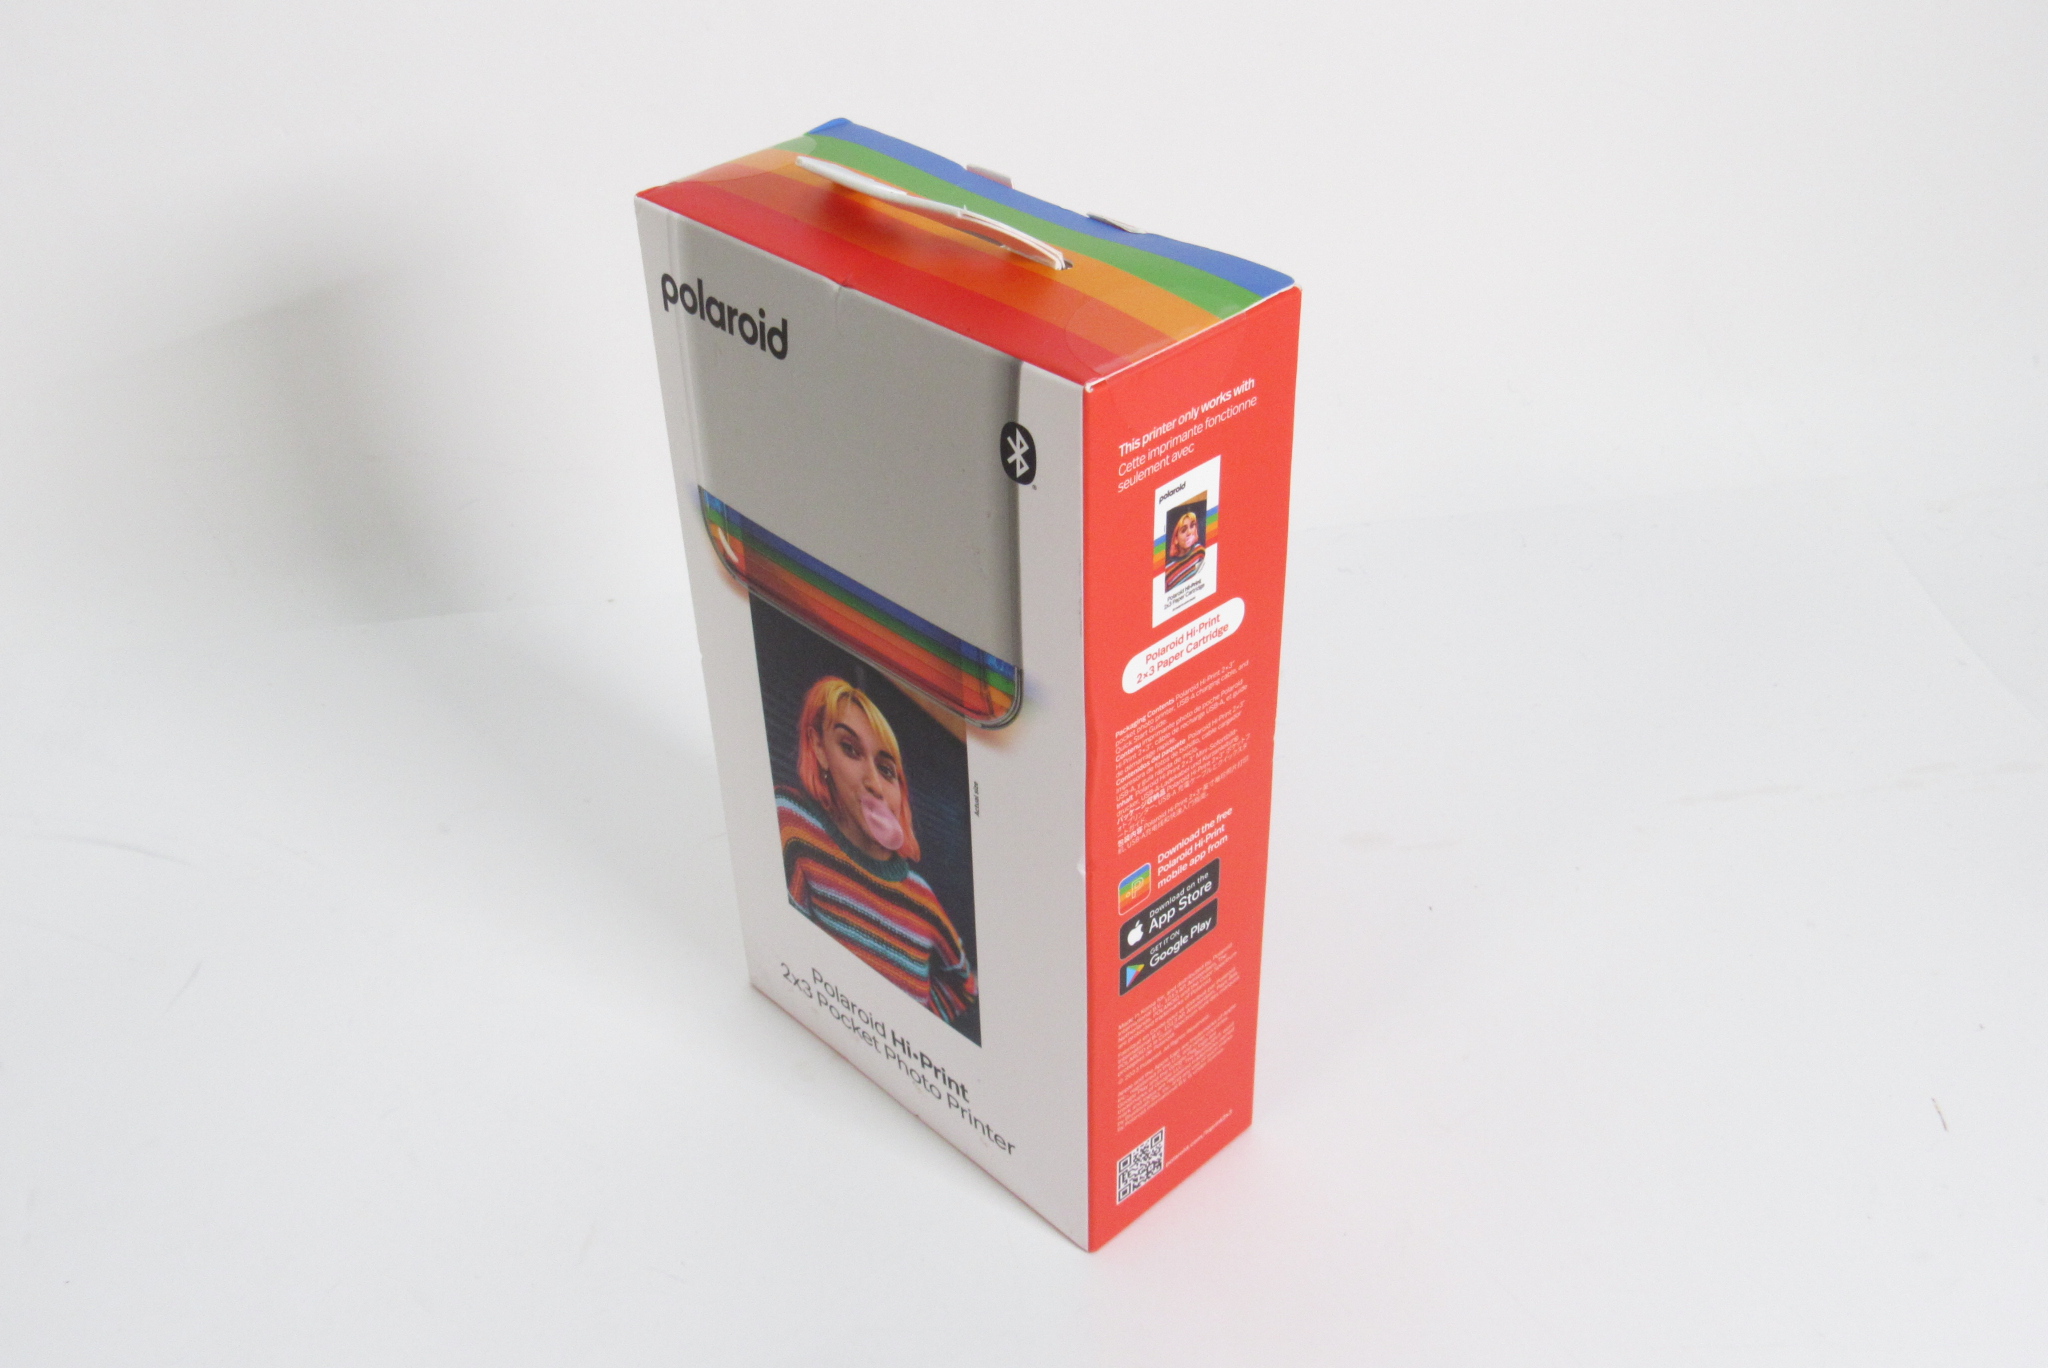 Polaroid Hi-Print 2x3 Pocket Bluetooth Photo Printer